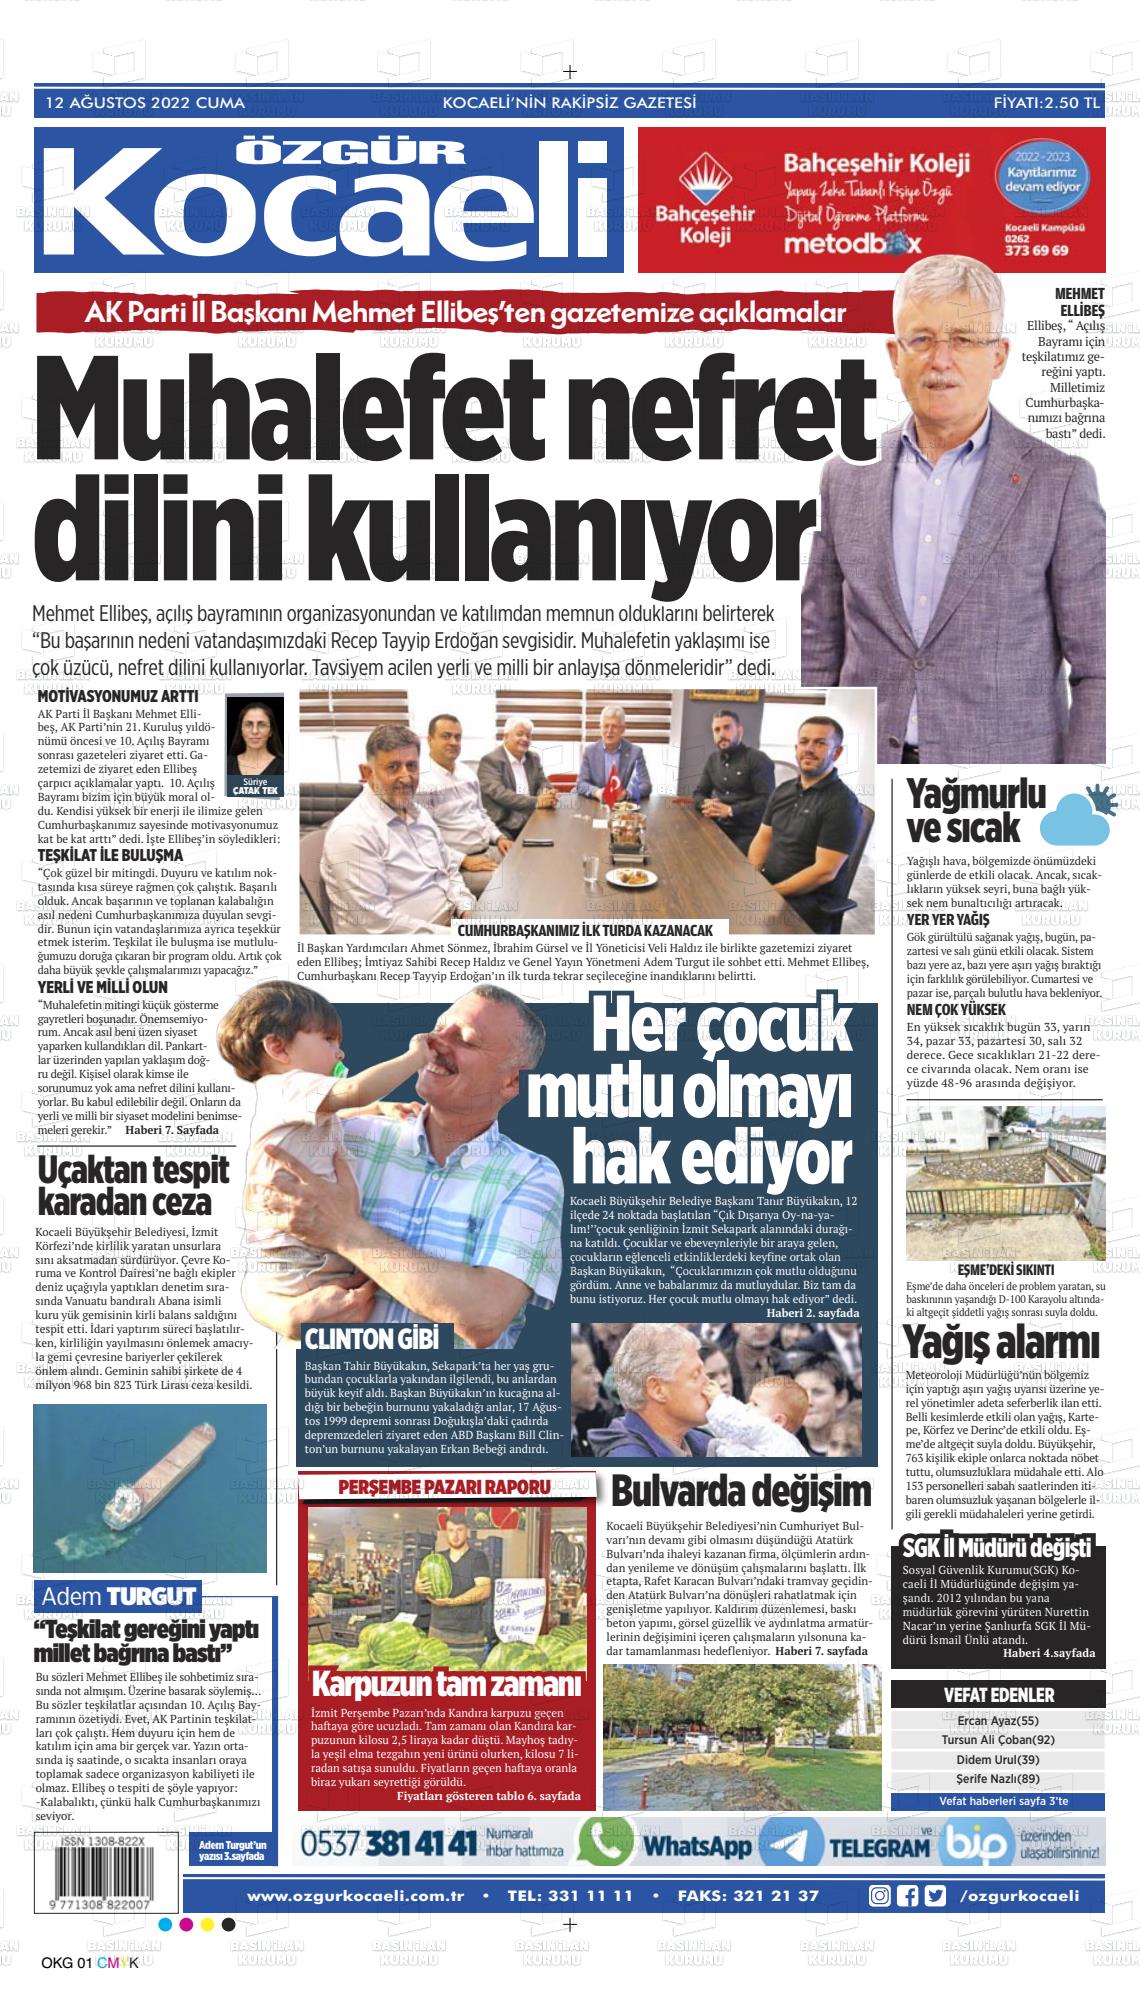 12 Ağustos 2022 Özgür Kocaeli Gazete Manşeti